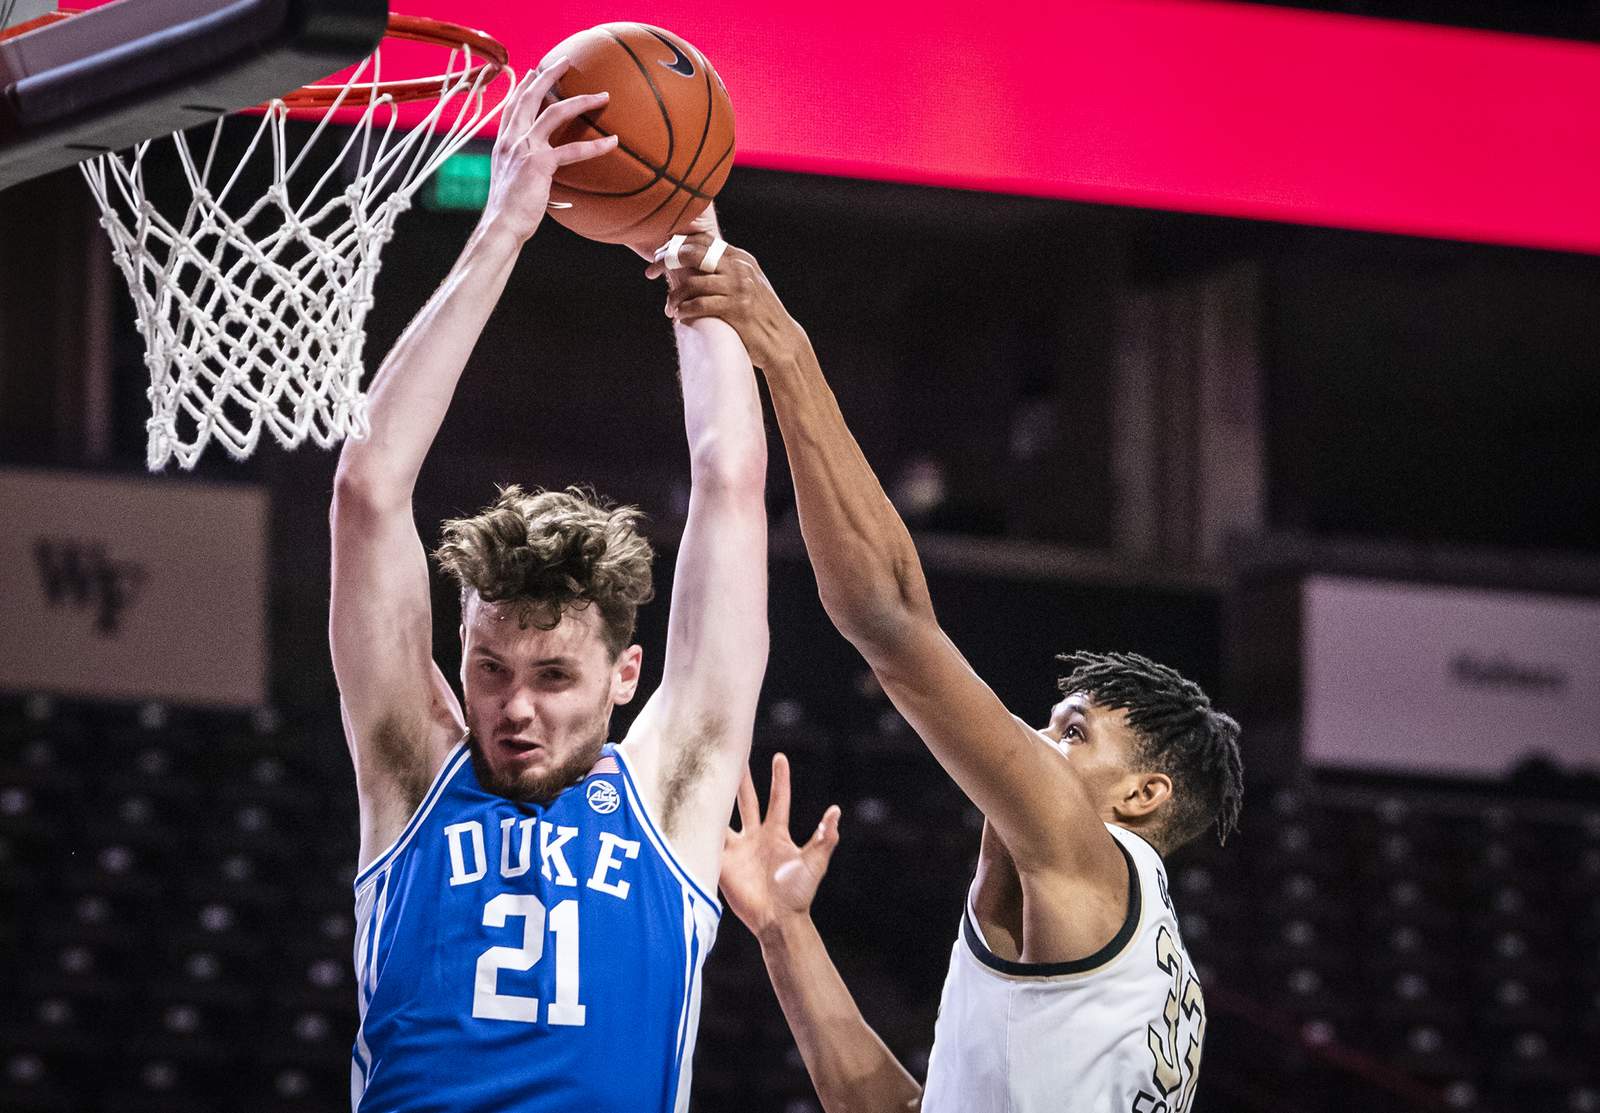 Duke vs. Florida State ACC Men’s Basketball Quarterfinal canceled due to coronavirus concerns